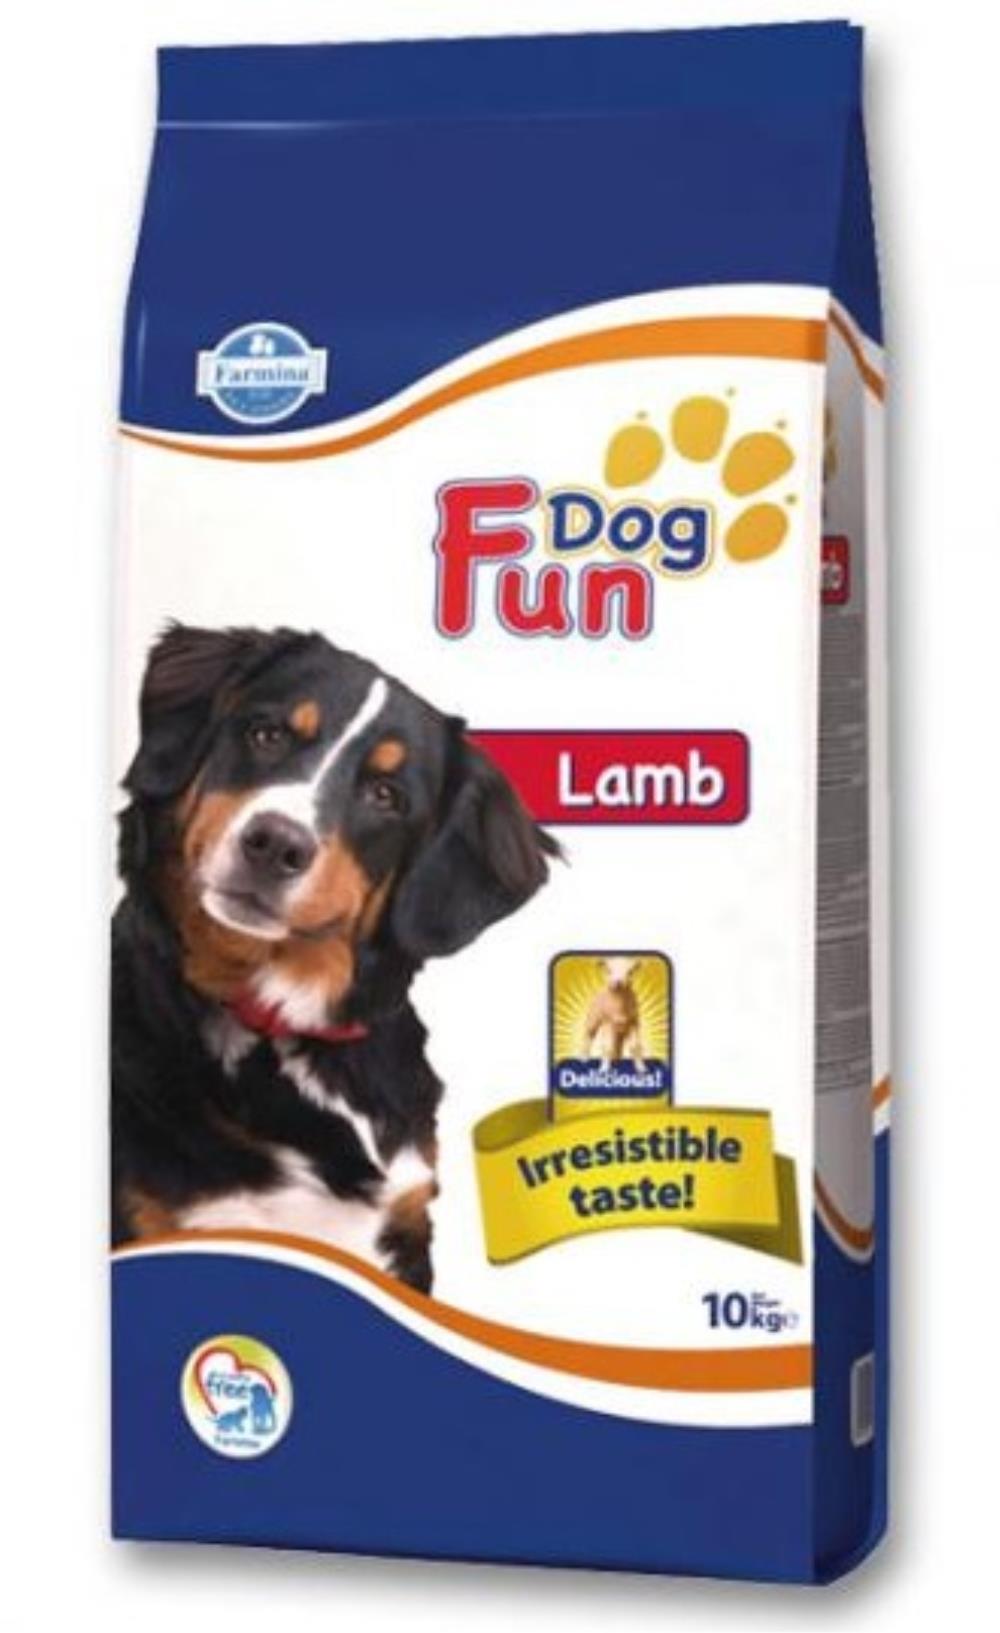 Fun Dog lamb 10kg